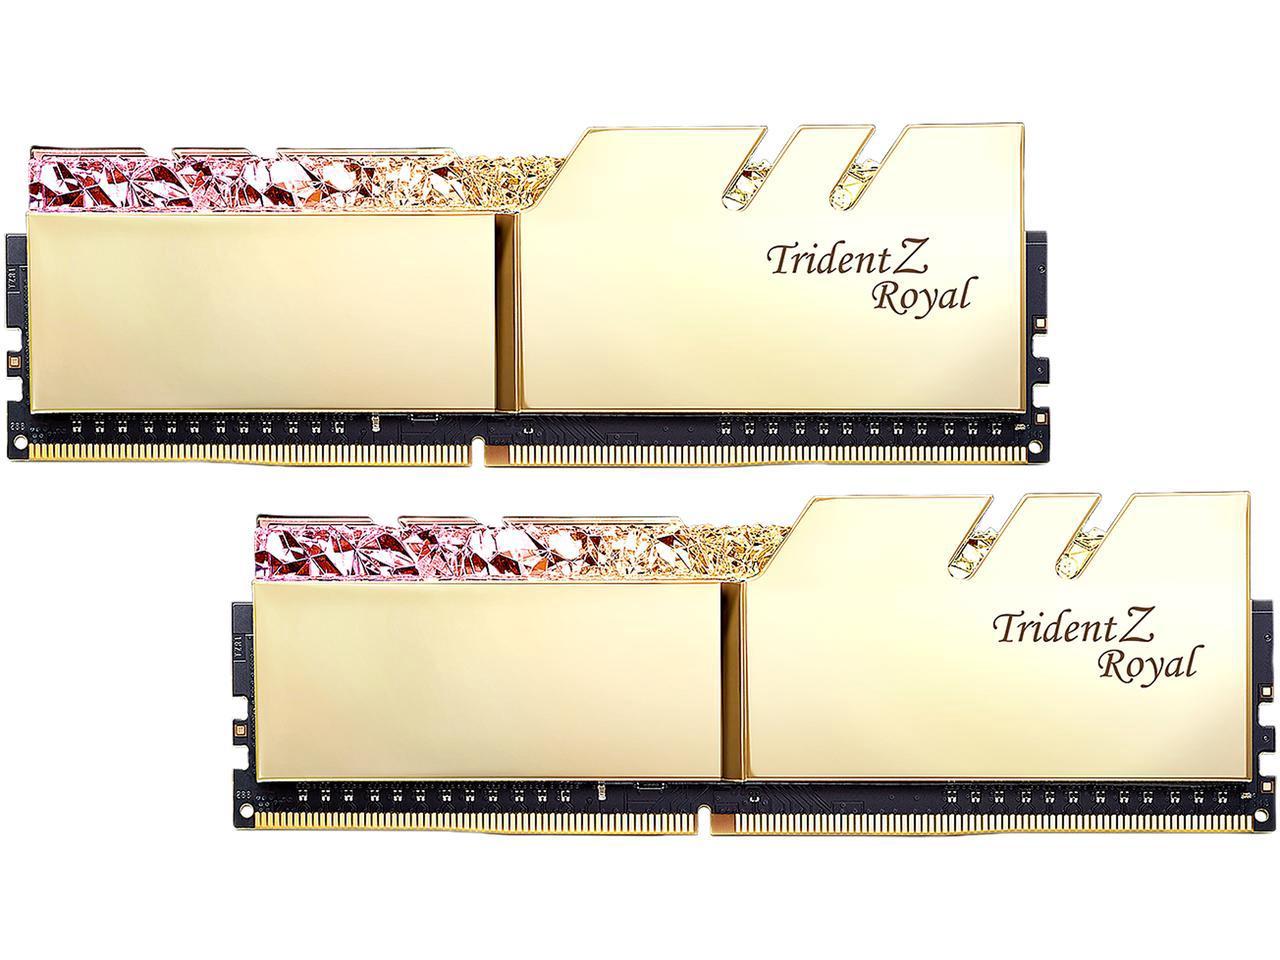 G Skill Trident Z Royal Series DDR4 16GB (2 x 8GB) 3000MHz - G